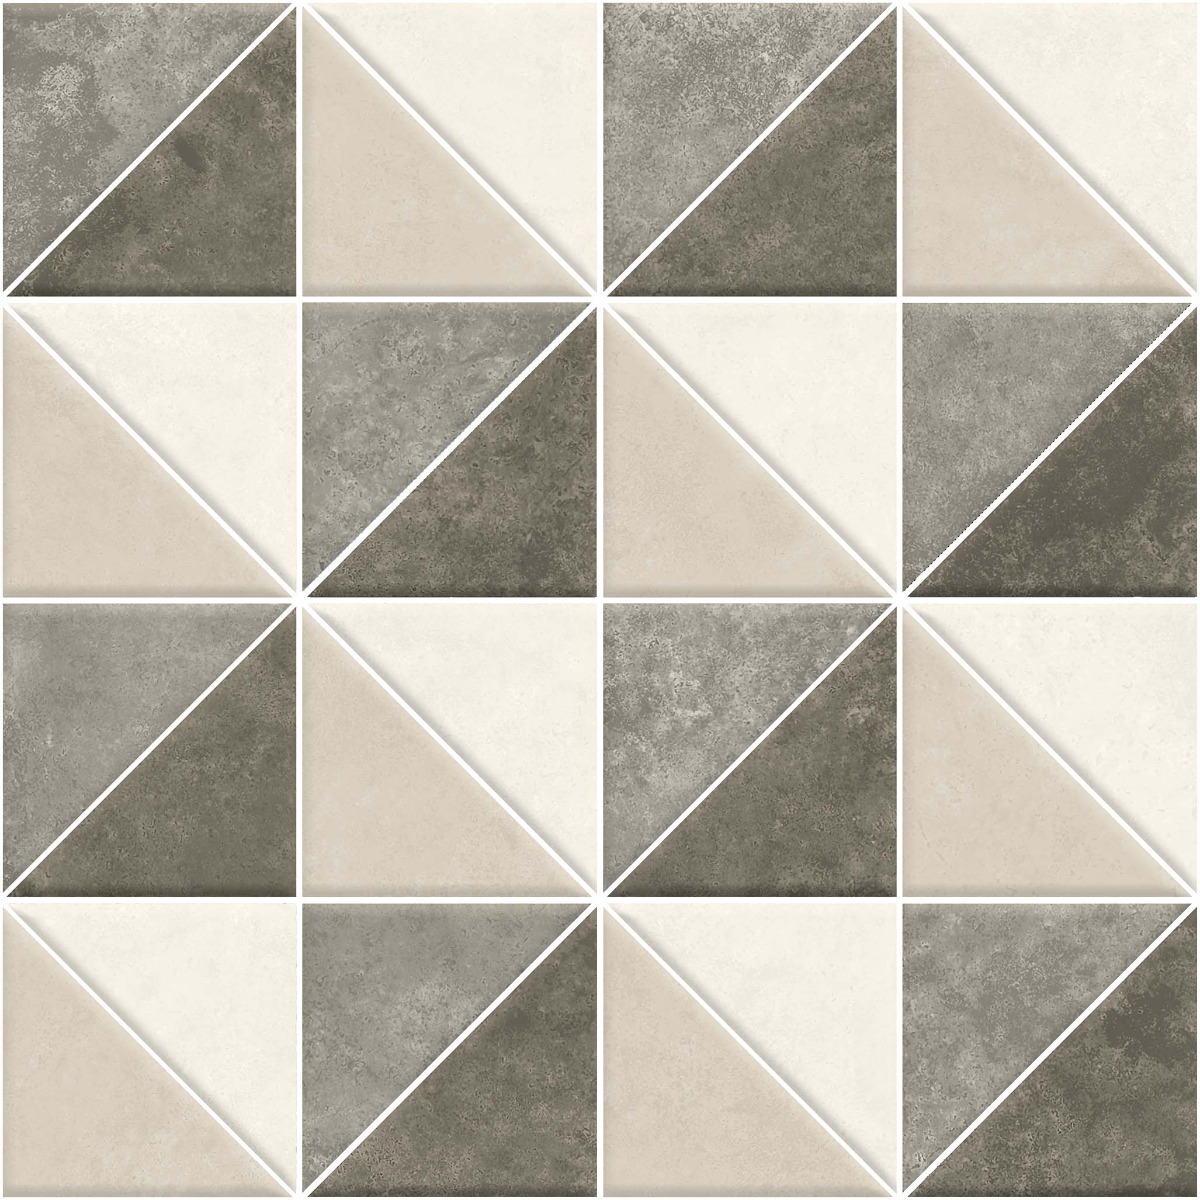 Grey Tiles for Bathroom Tiles, Living Room Tiles, Bedroom Tiles, Accent Tiles, Hospital Tiles, High Traffic Tiles, Bar/Restaurant, Commercial/Office, Outdoor Area, School & Collages